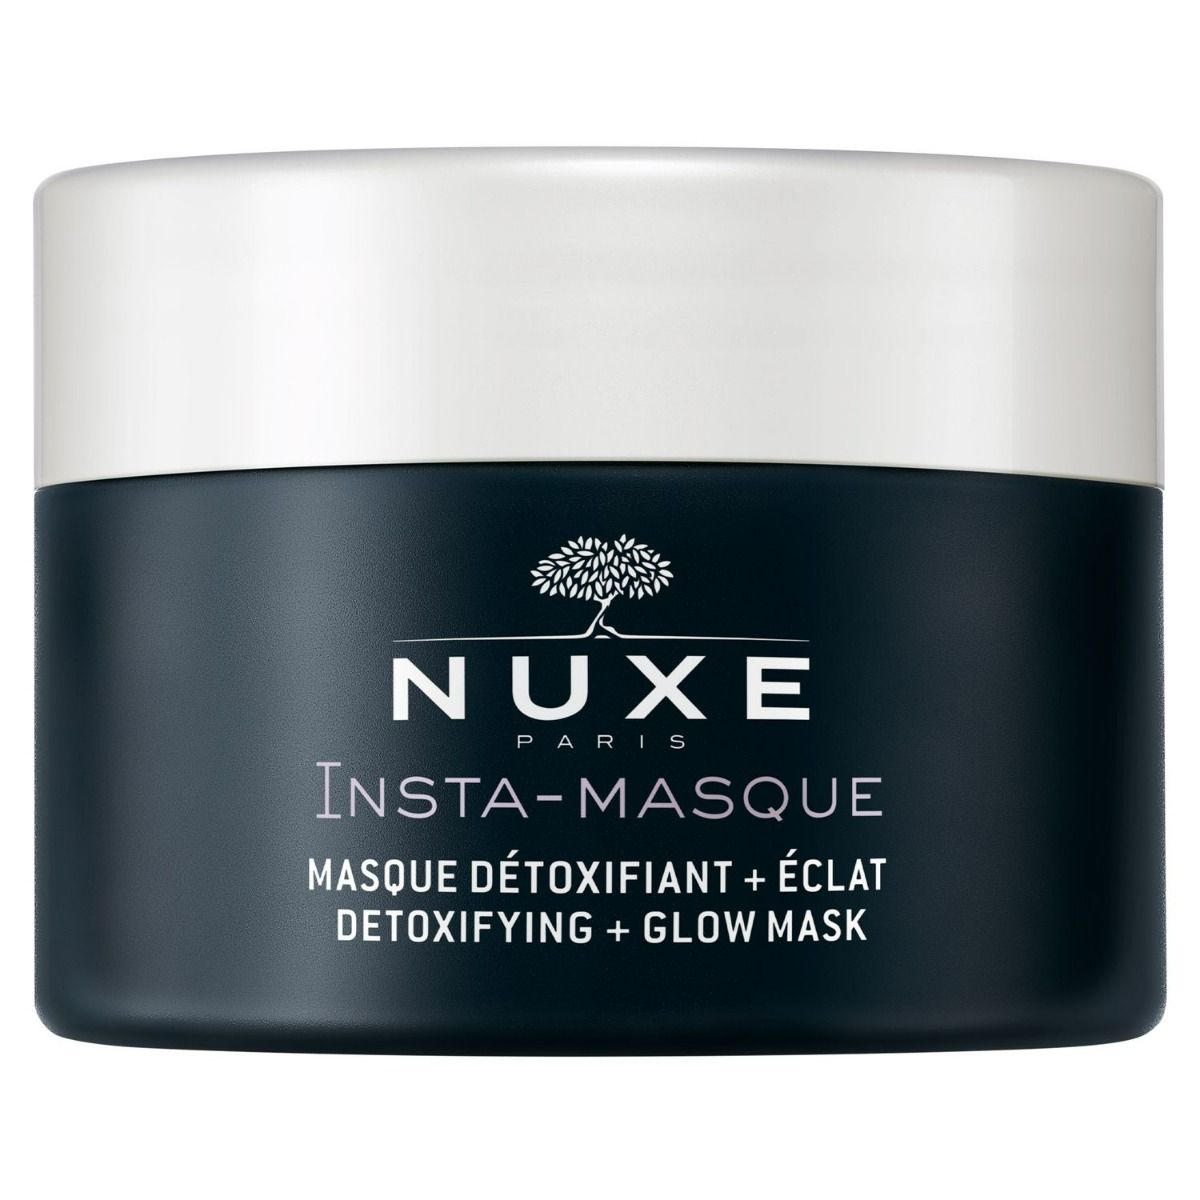 Nuxe Insta-Masque Détoxifiant + Eclat медицинская маска, 50 ml nuxe маска insta masque очищающая разглаживающая для лица 50 мл